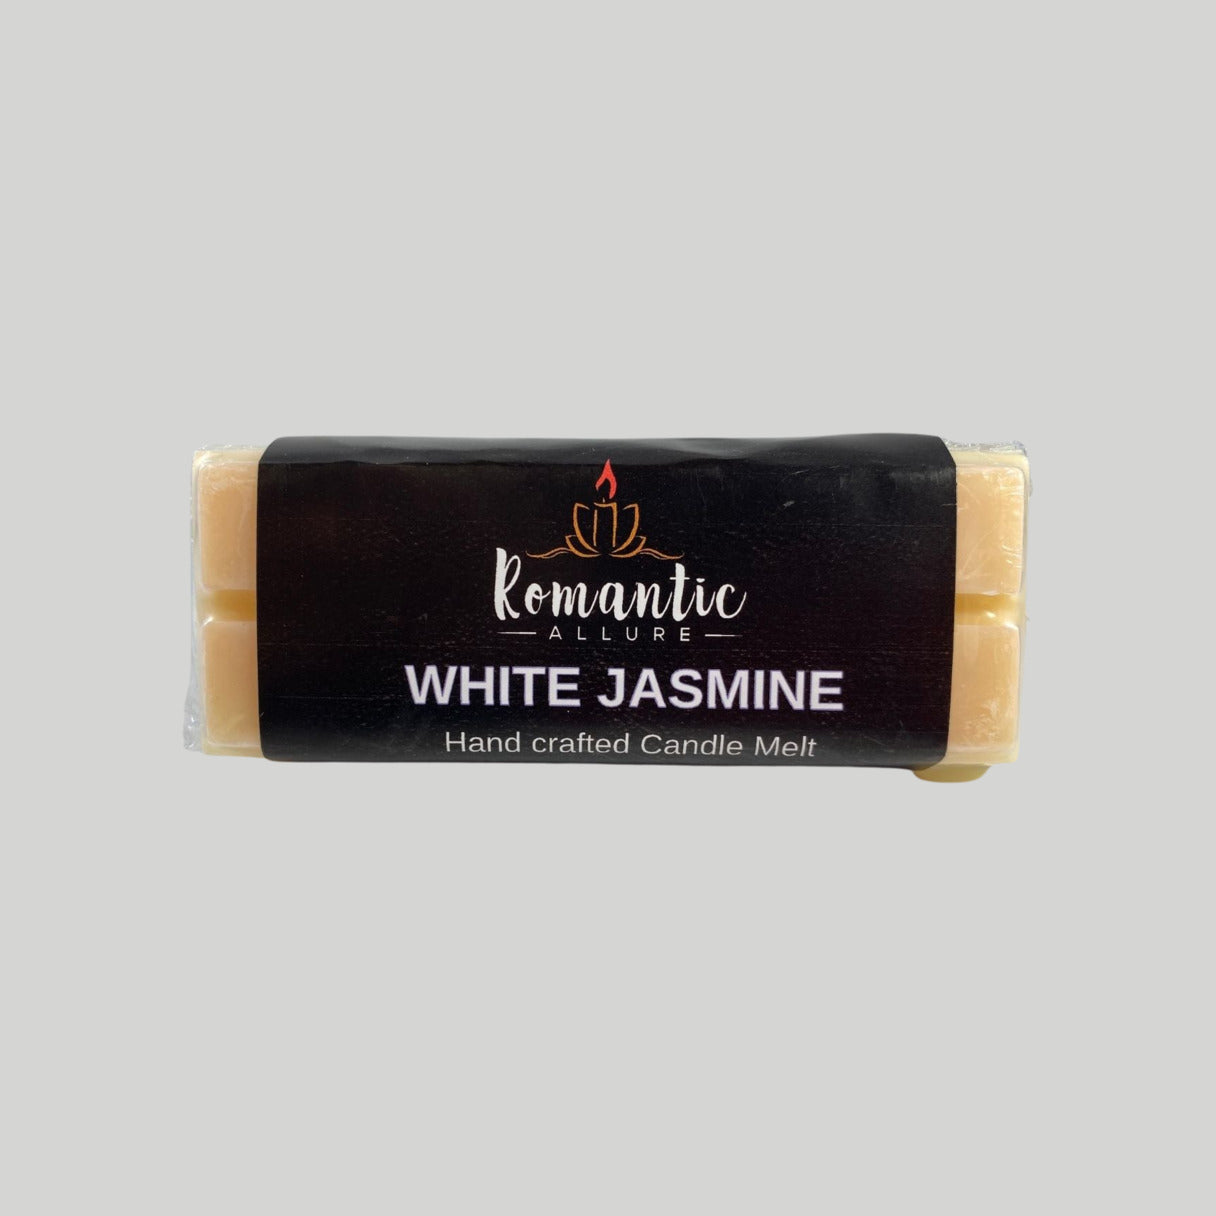 White Jasmine Candle Bar - Romantic Allure Candle Company